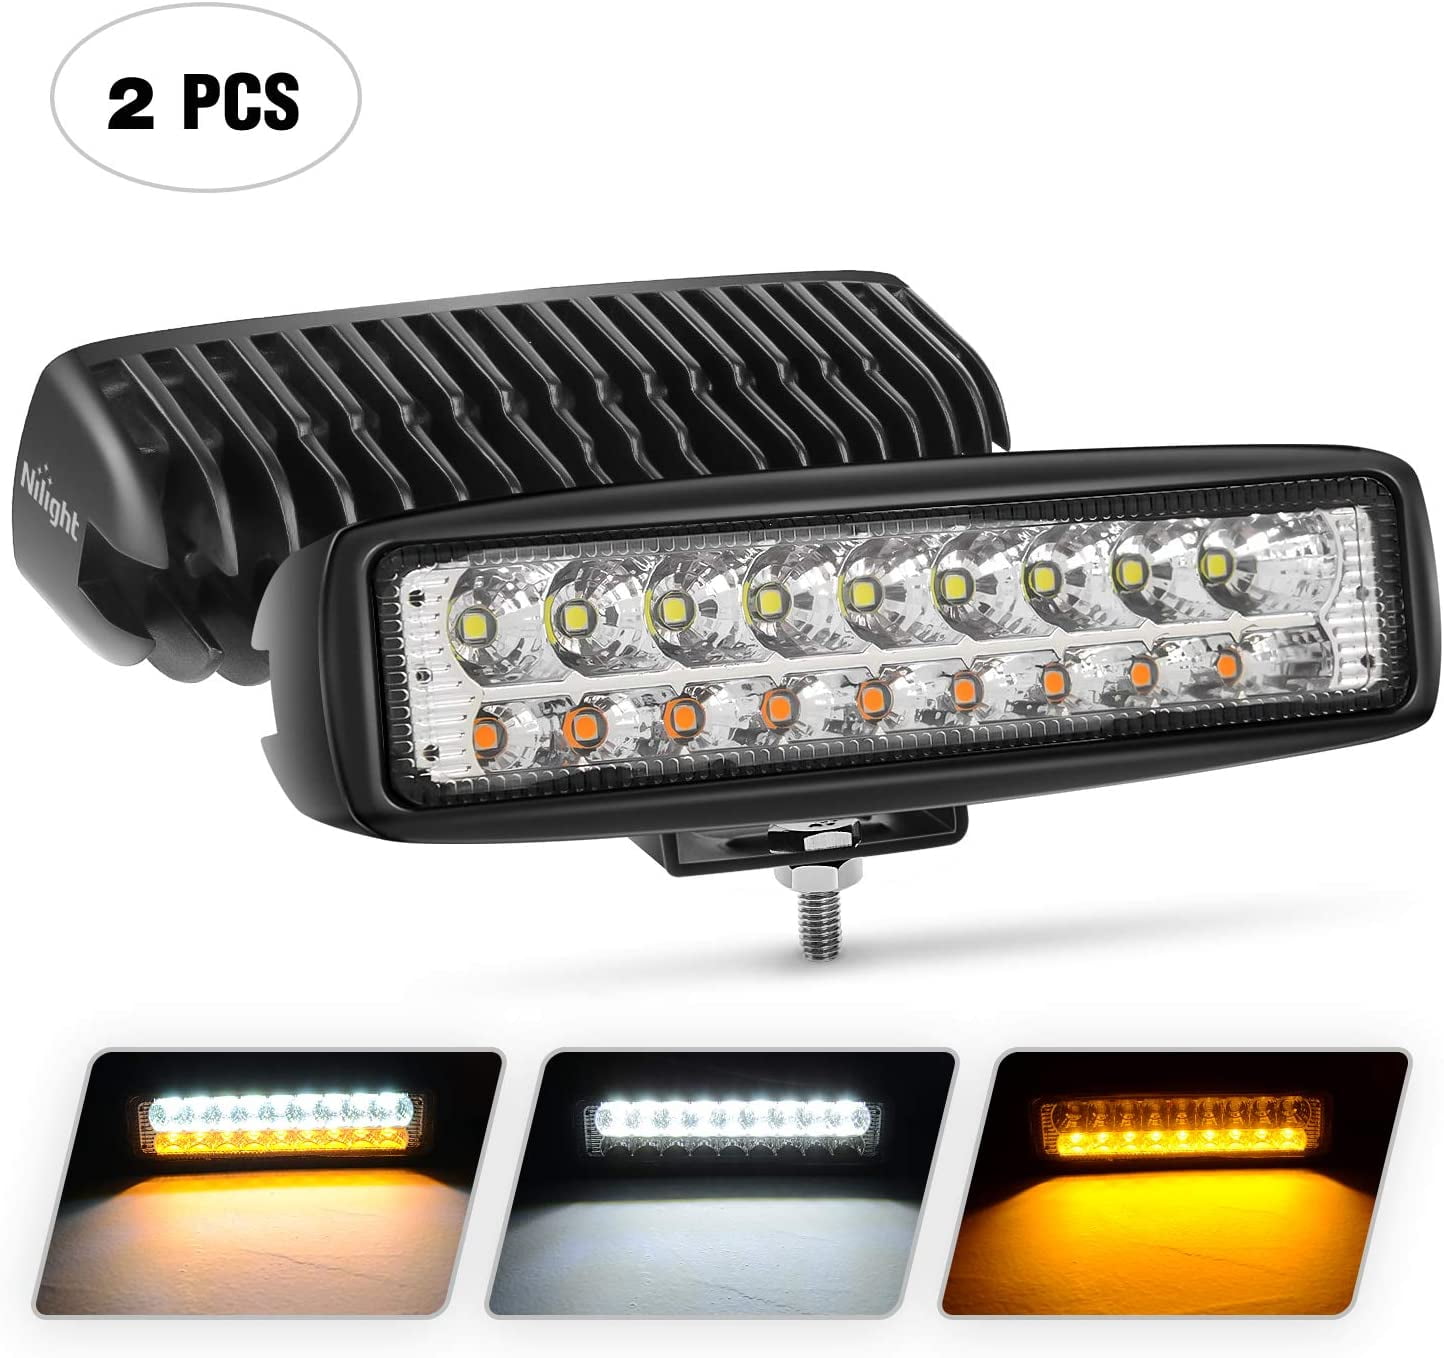 Nilight 2PCS 6.5Inch 120W Flood LED Light Bar Amber Fog Driving Lamps for Trucks 